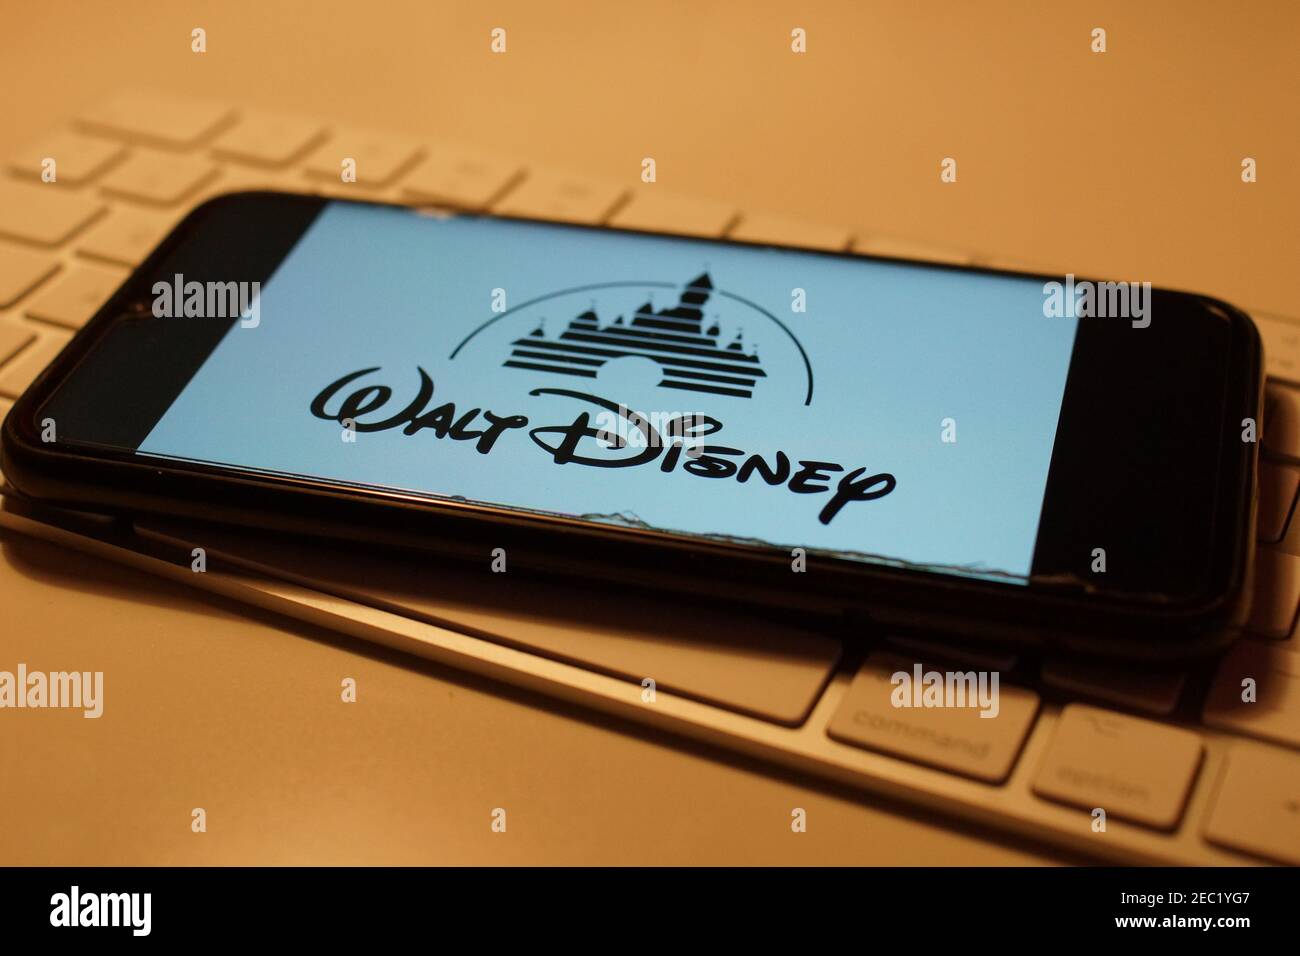 Smartphone with Walt Disney logo on computer keyboard Stock Photo